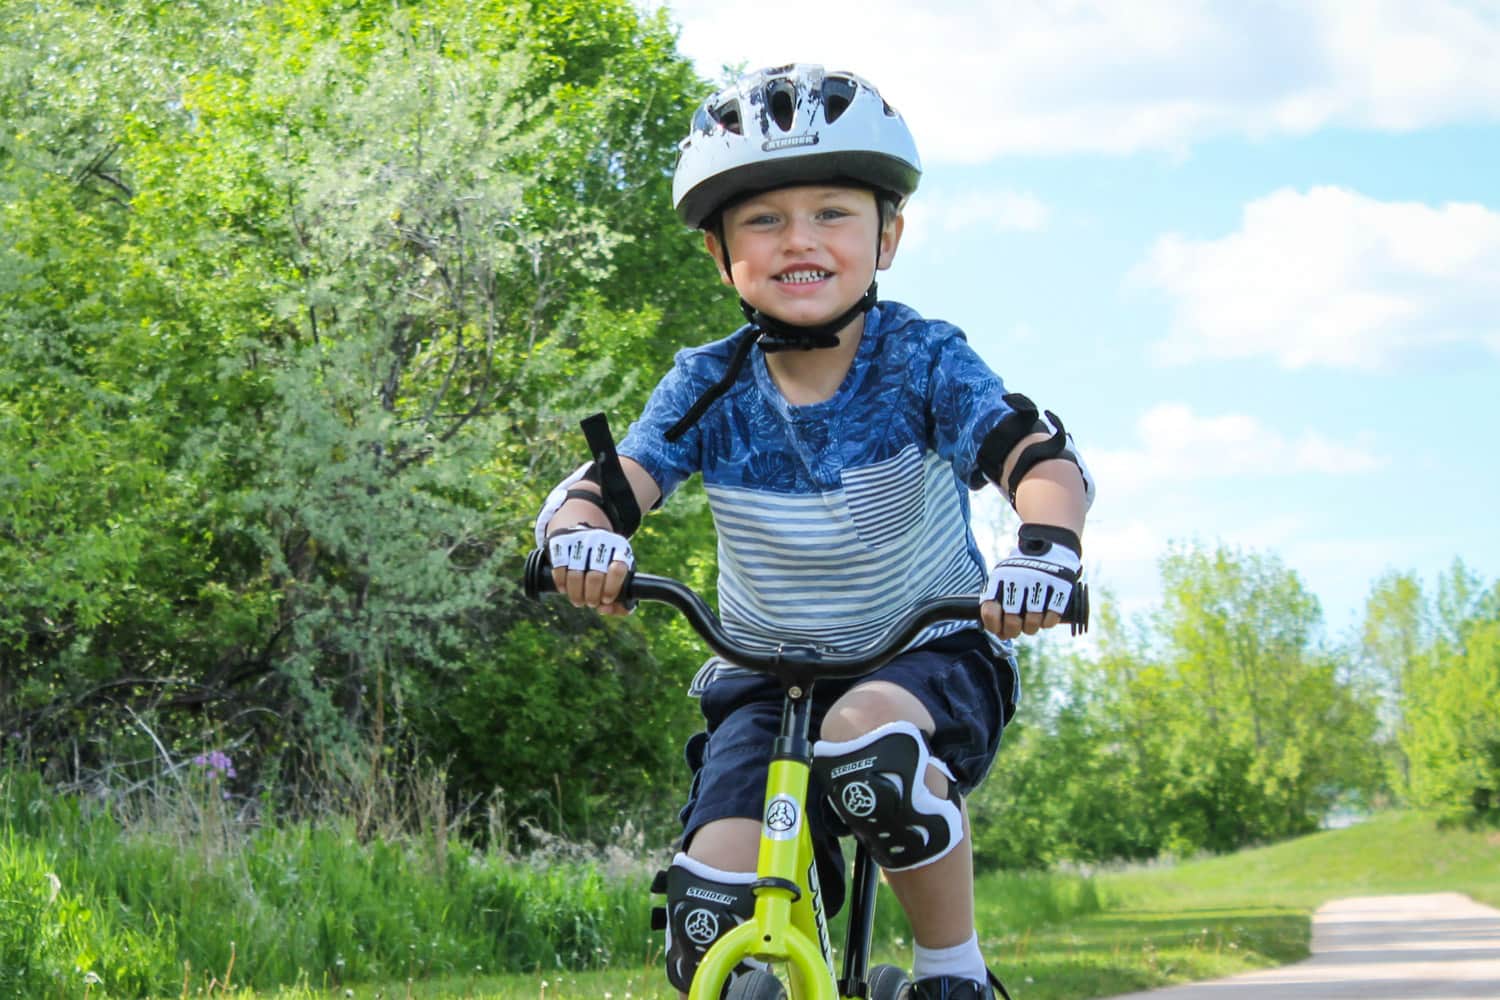 Smiling boy rides a bike with a Strider Splash helmet on